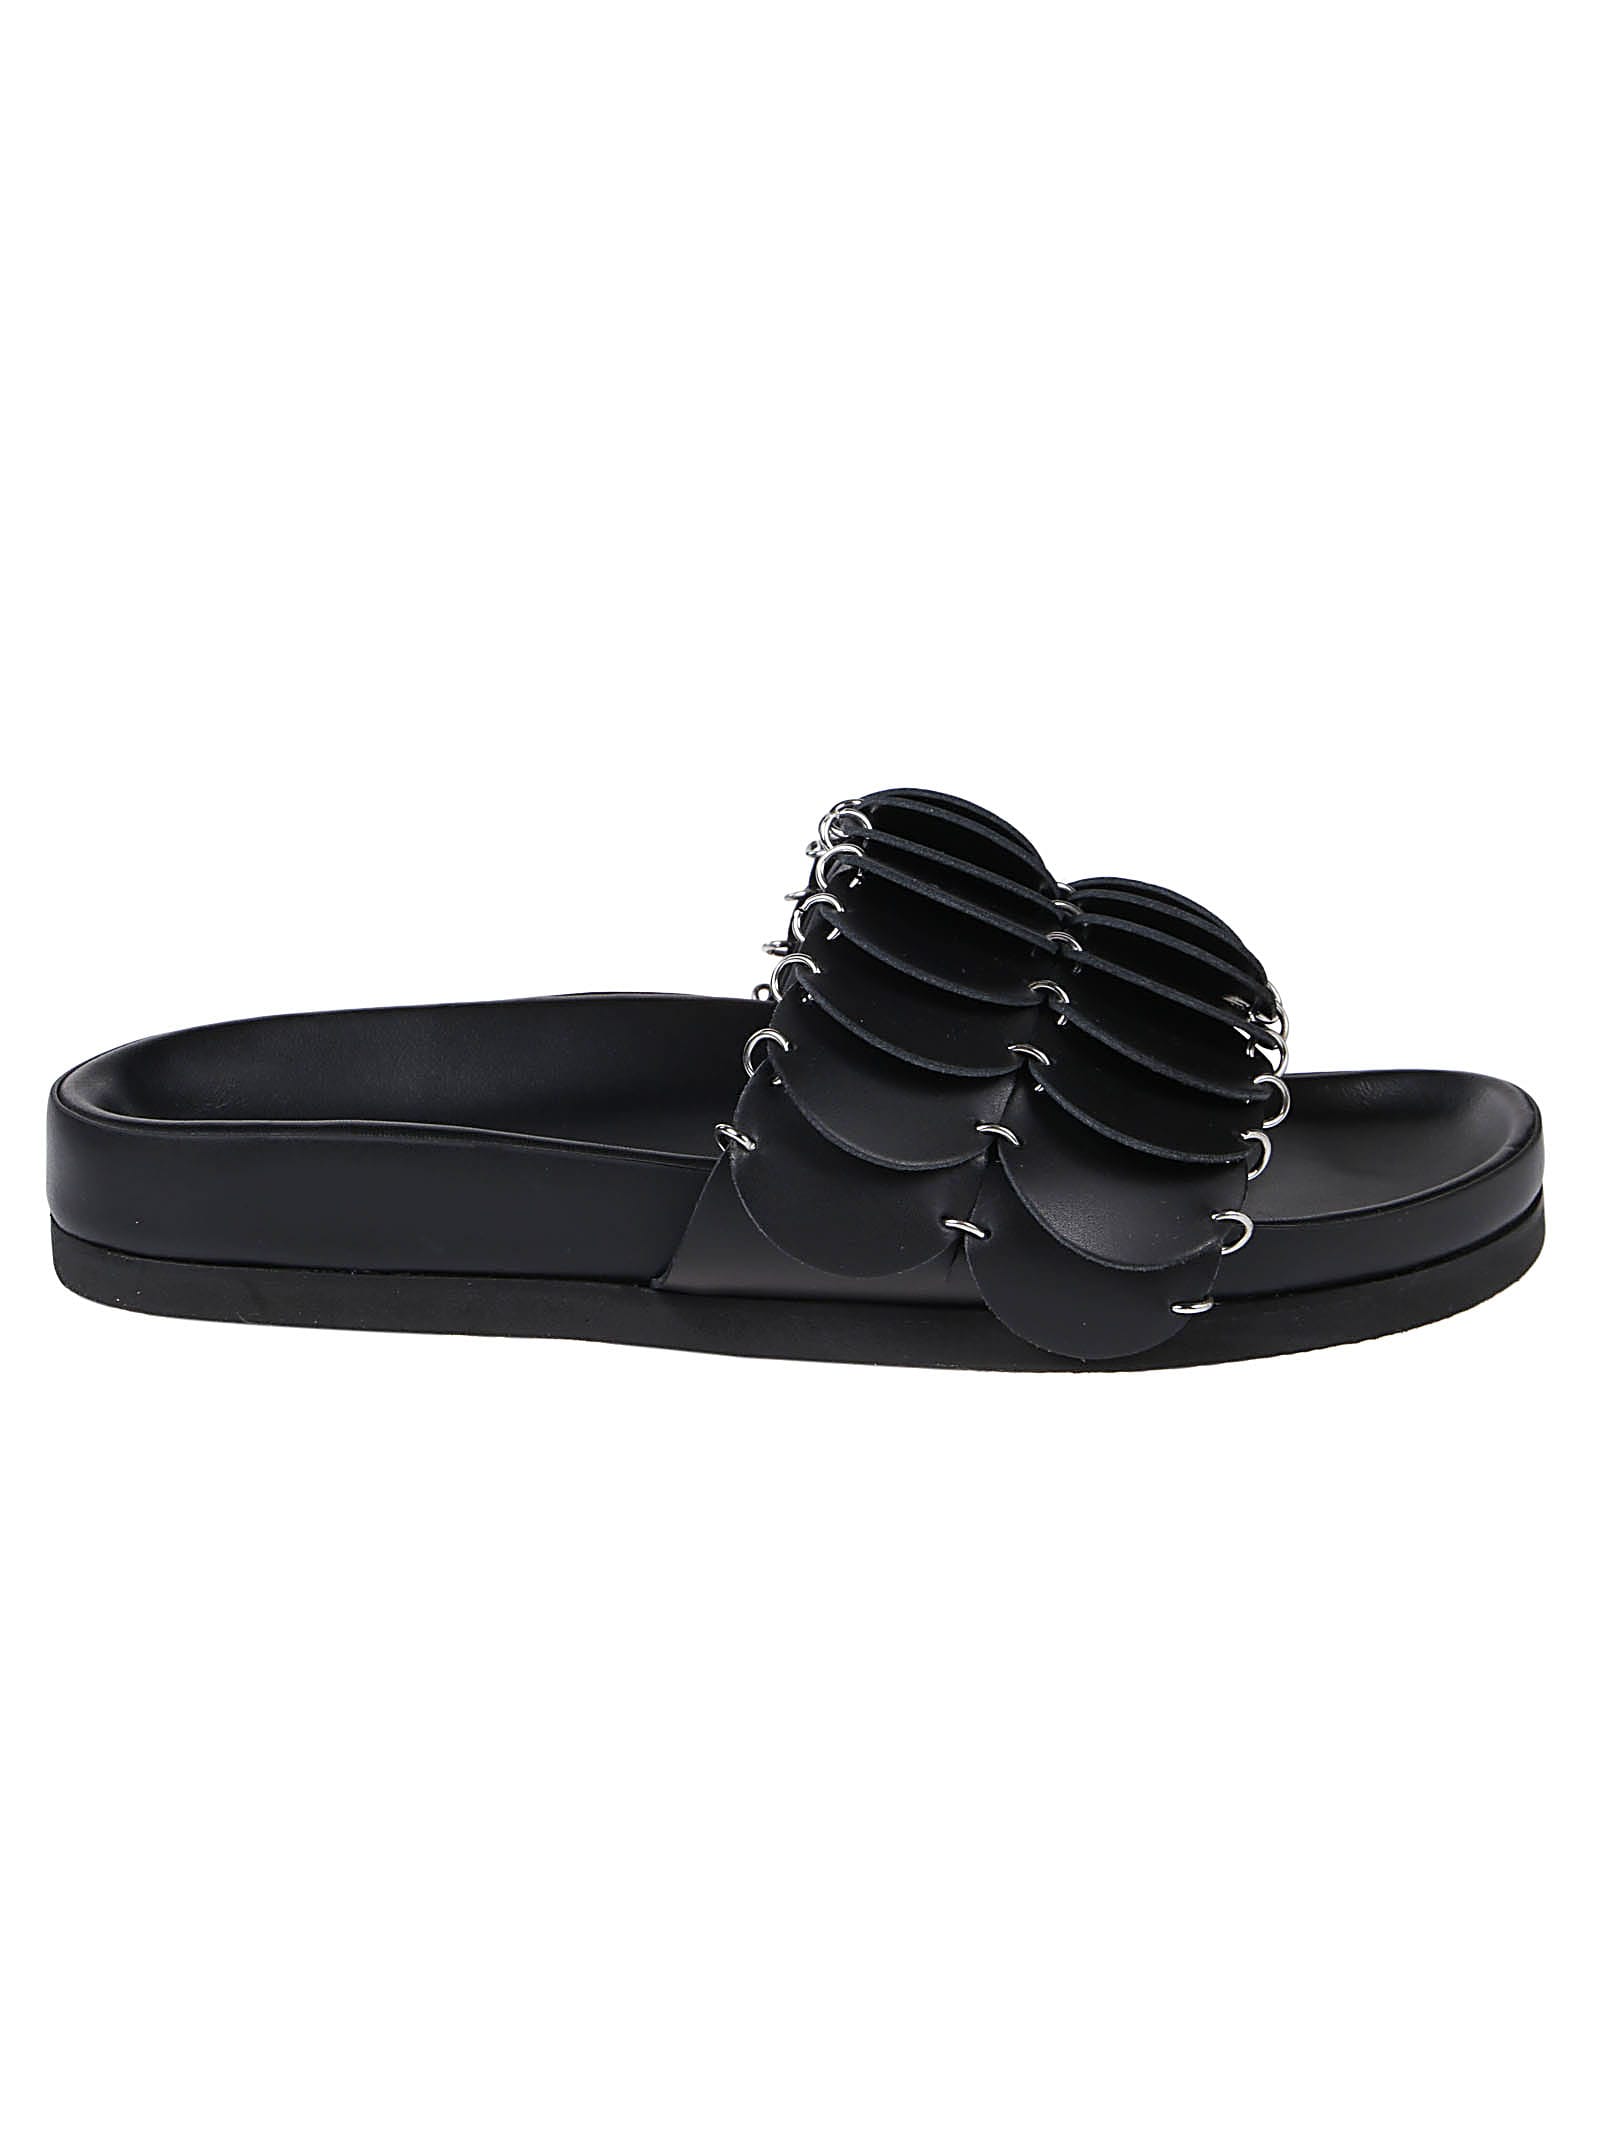 Paco Rabanne Pacoio Slide Sandals